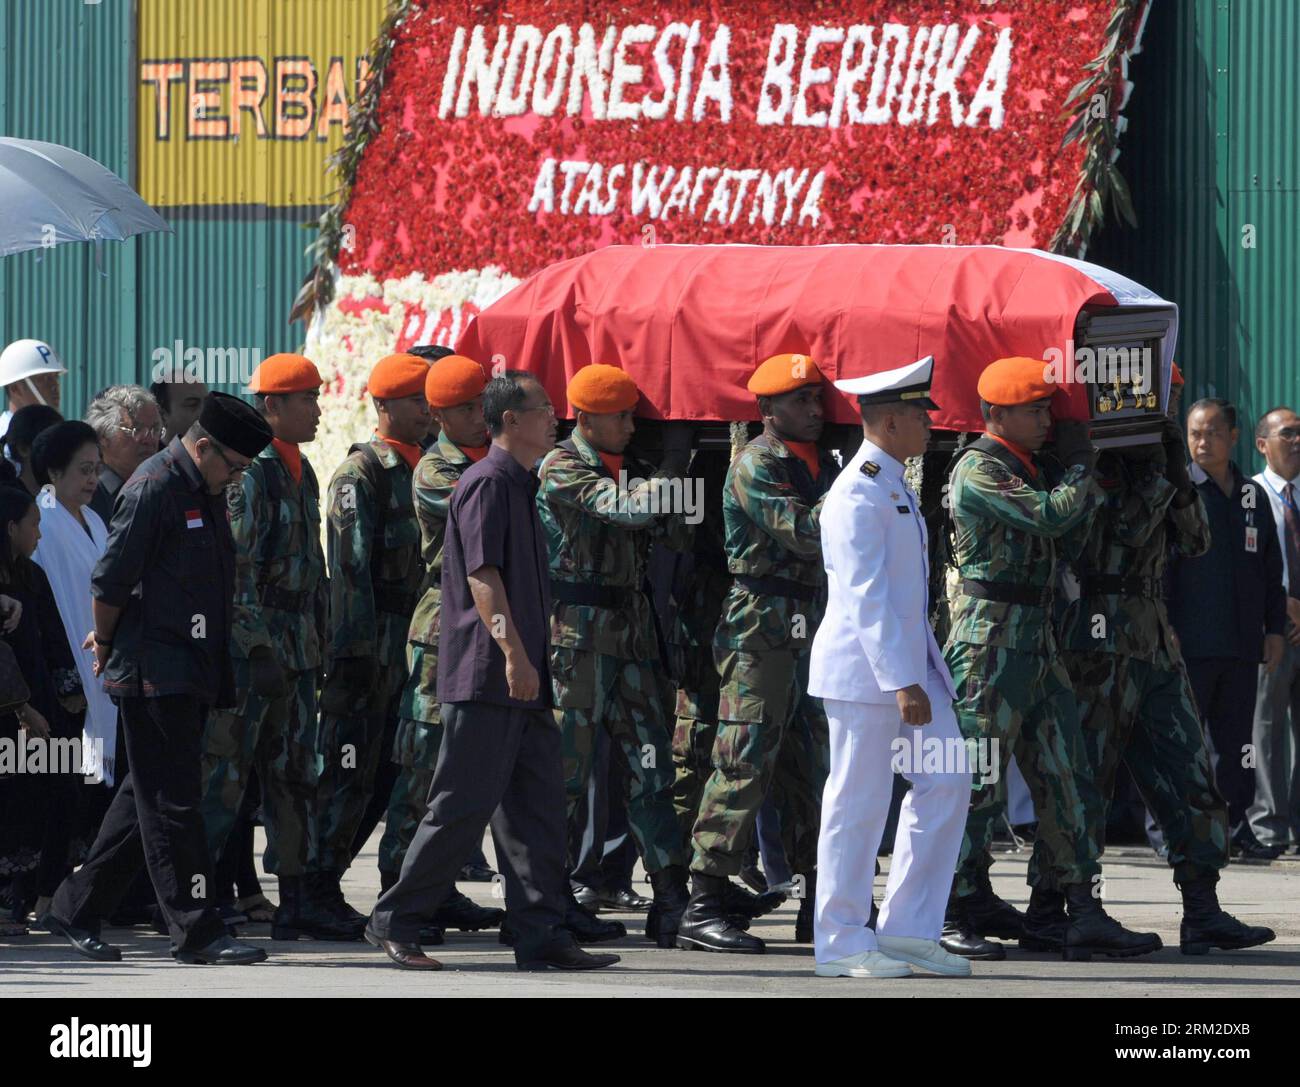 Bildnummer: 59794545  Datum: 09.06.2013  Copyright: imago/Xinhua (130609) -- JAKARTA, June 9, 2013 (Xinhua) -- Soldiers carry the coffin of Taufik Kiemas, chairman of the Indonesian People s Consultative Assembly and husband of former Indonesian President Megawati Sukarnoputri, during a ceremony at the military air base in Jakarta, Indonesia, June 9, 2013. Taufik Kiemas died at a Singapore hospital Saturday evening. (Xinhua/Zulkarnain) INDONESIA-JAKARTA-TAUFIK KIEMAS-FUNERAL PUBLICATIONxNOTxINxCHN People Politik Beerdigung Trauerfeier xcb x0x 2013 quer premiumd      59794545 Date 09 06 2013 Co Stock Photo